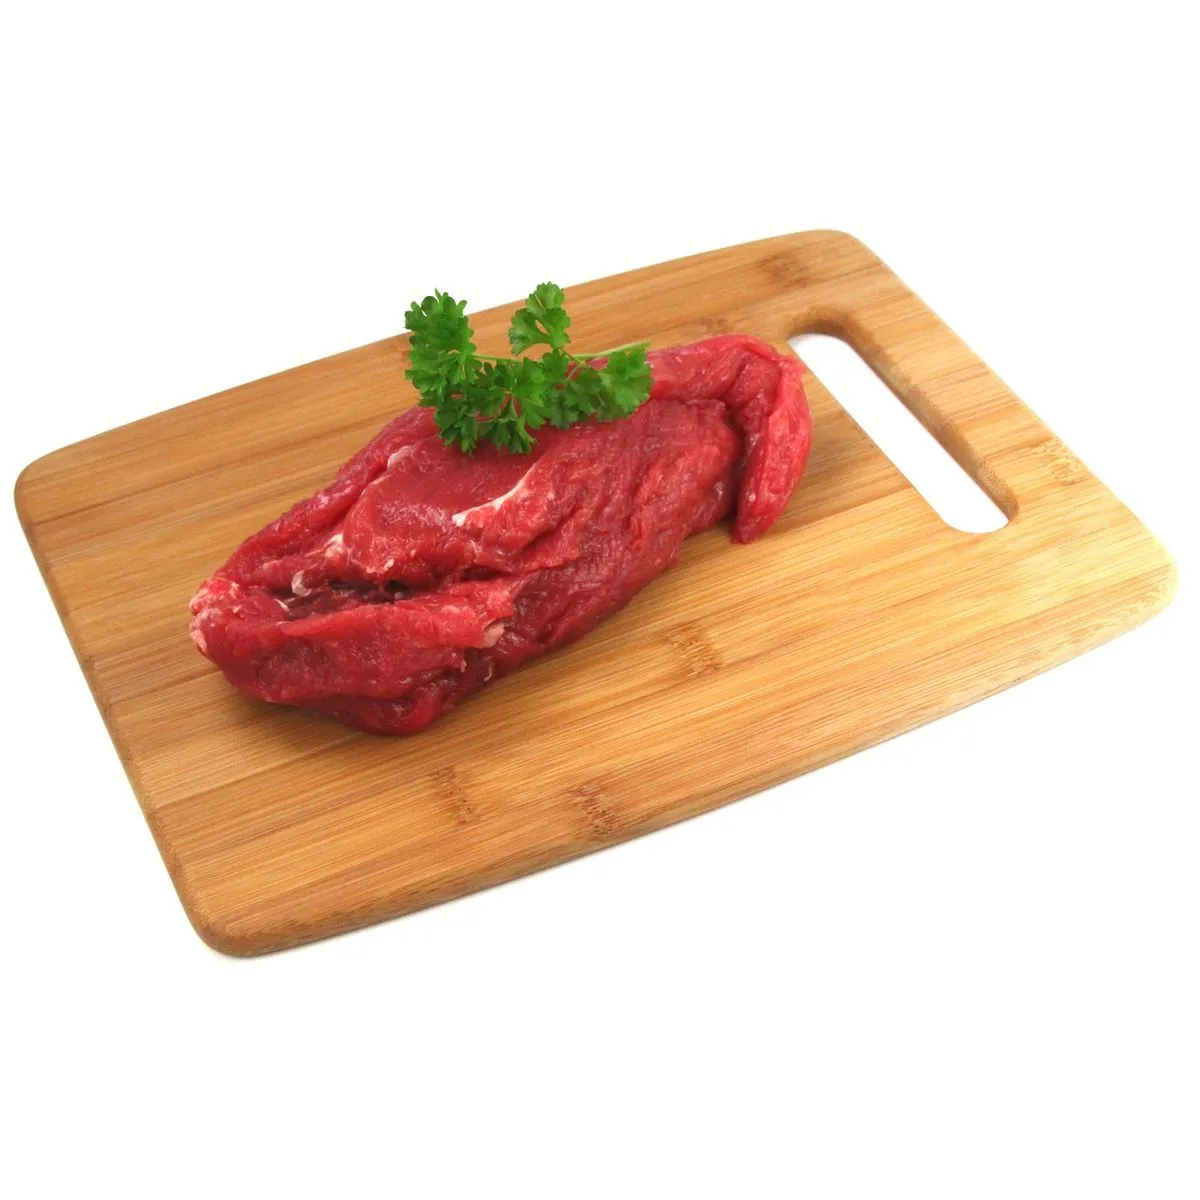 viande bovine : pièce à fondue ou brochettes(1)